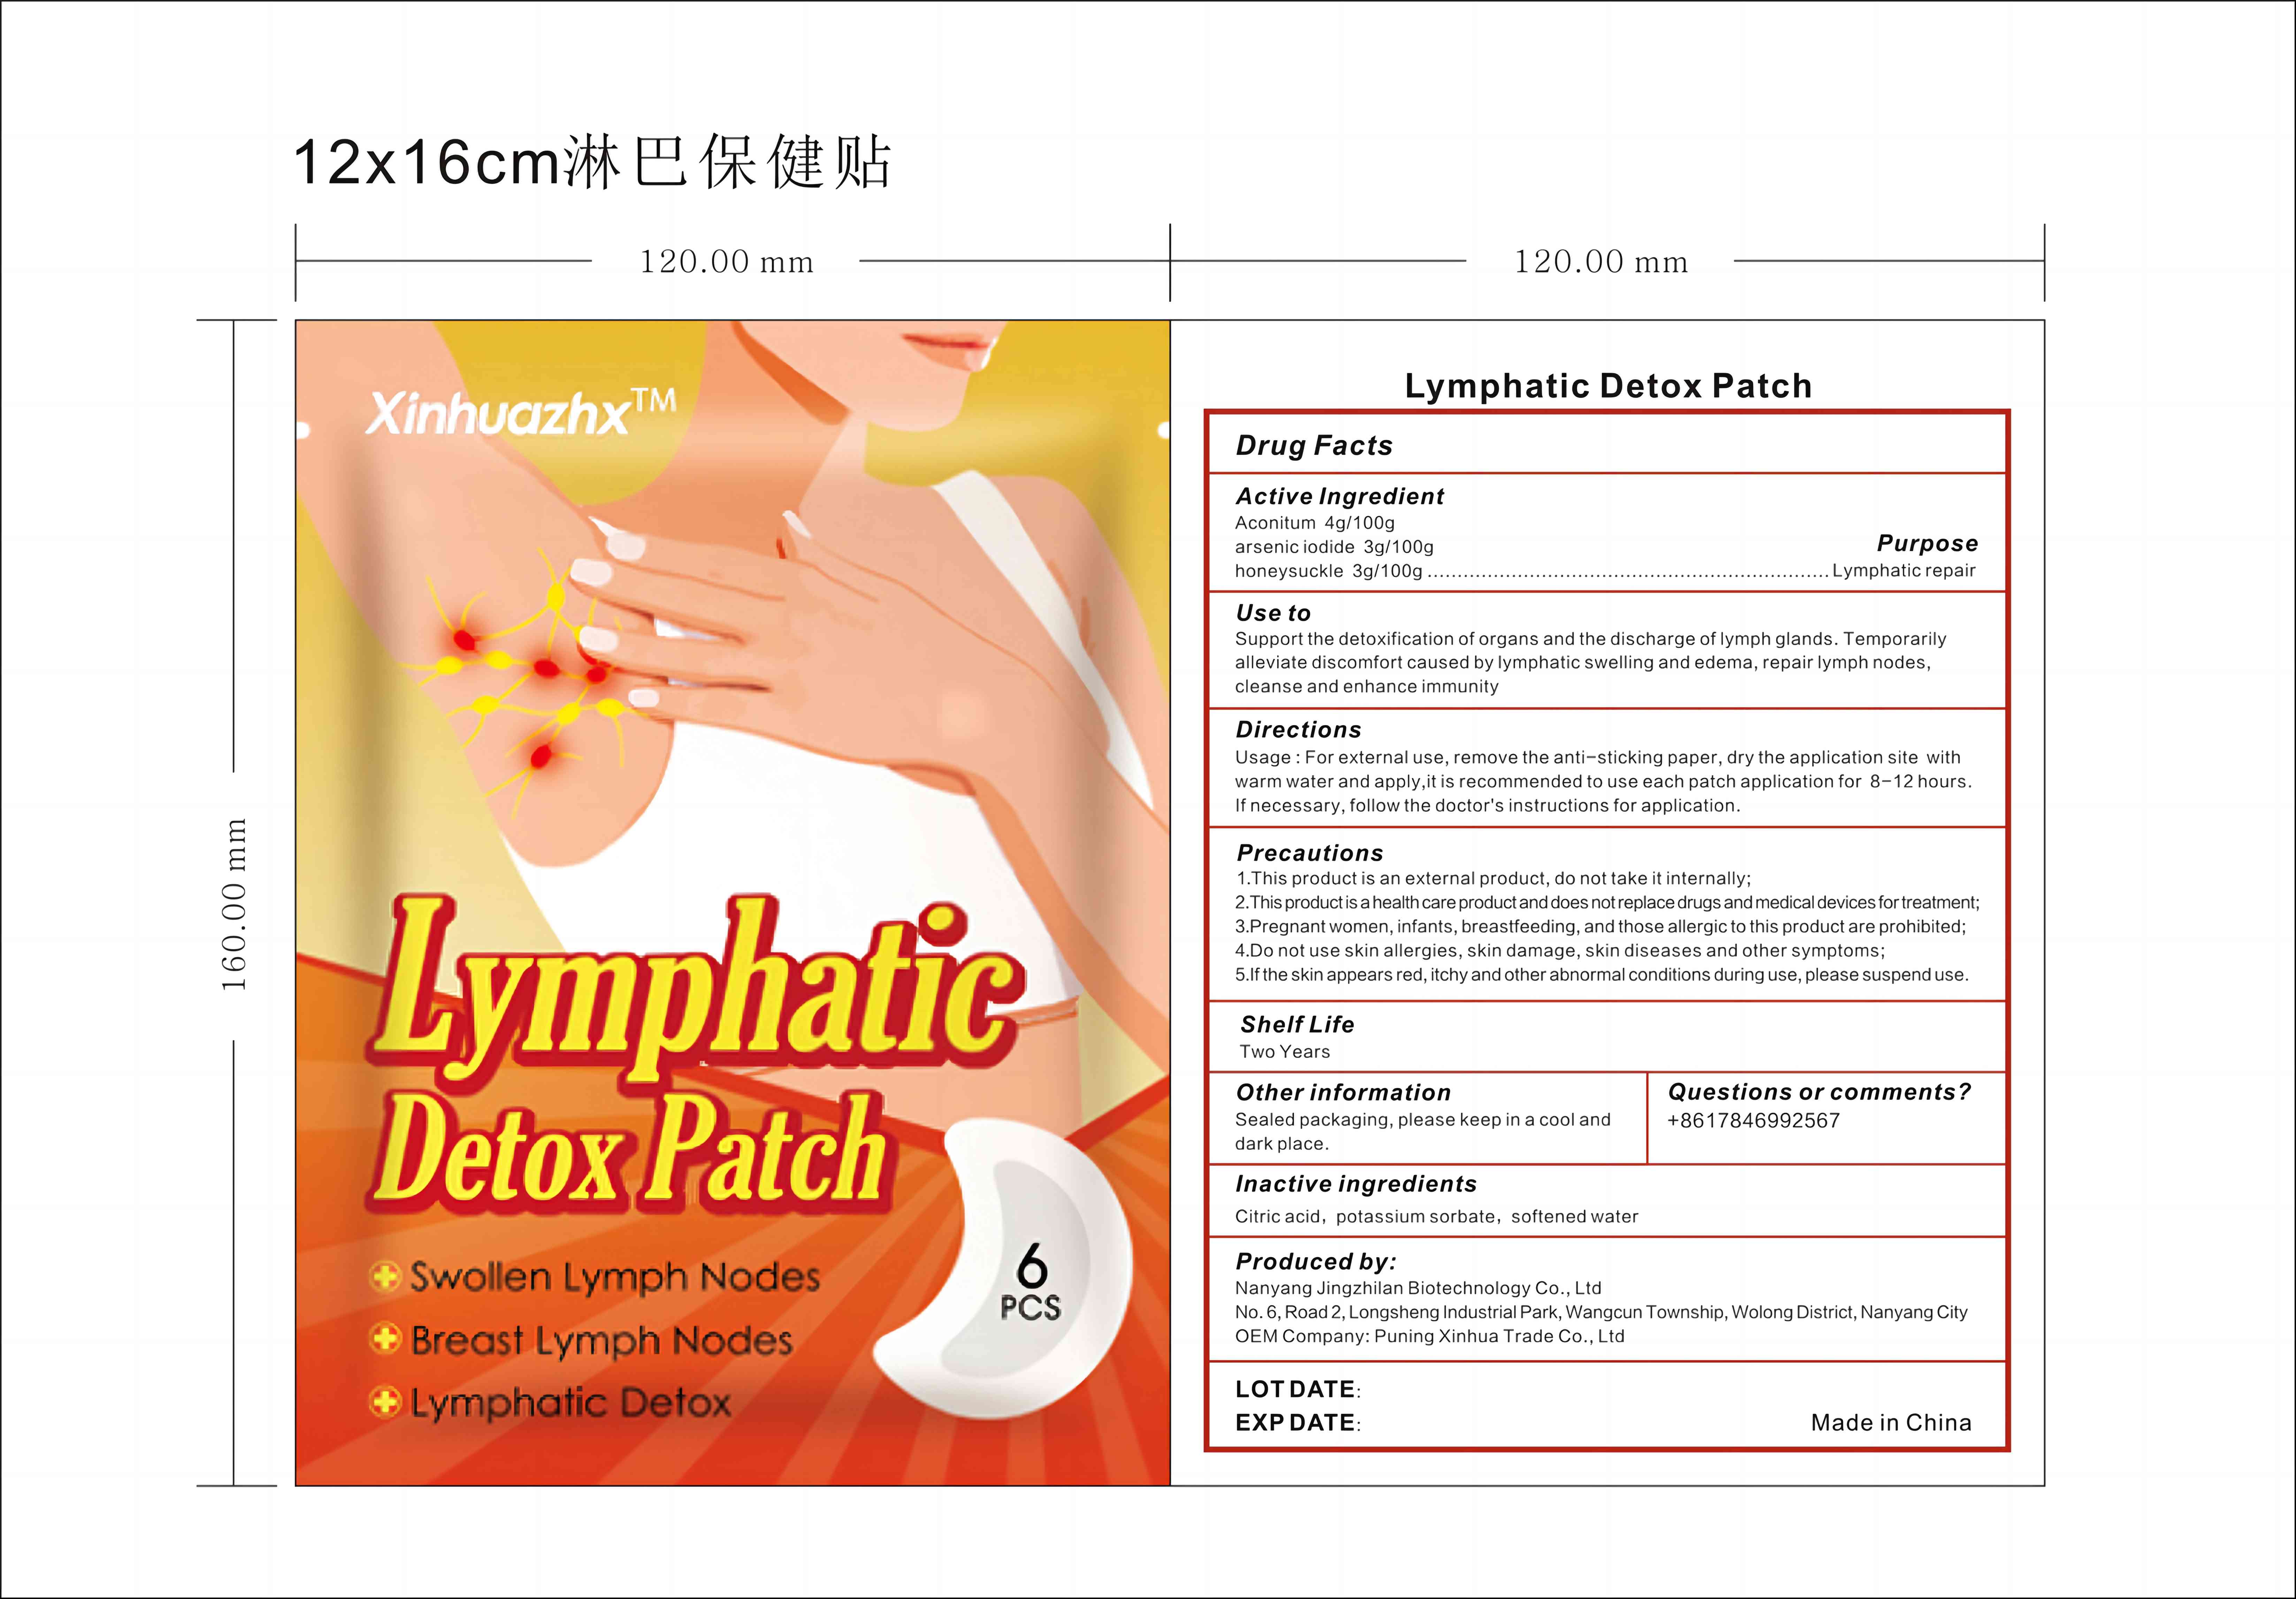 Xinhuazhx Lymphatic Detox Patch